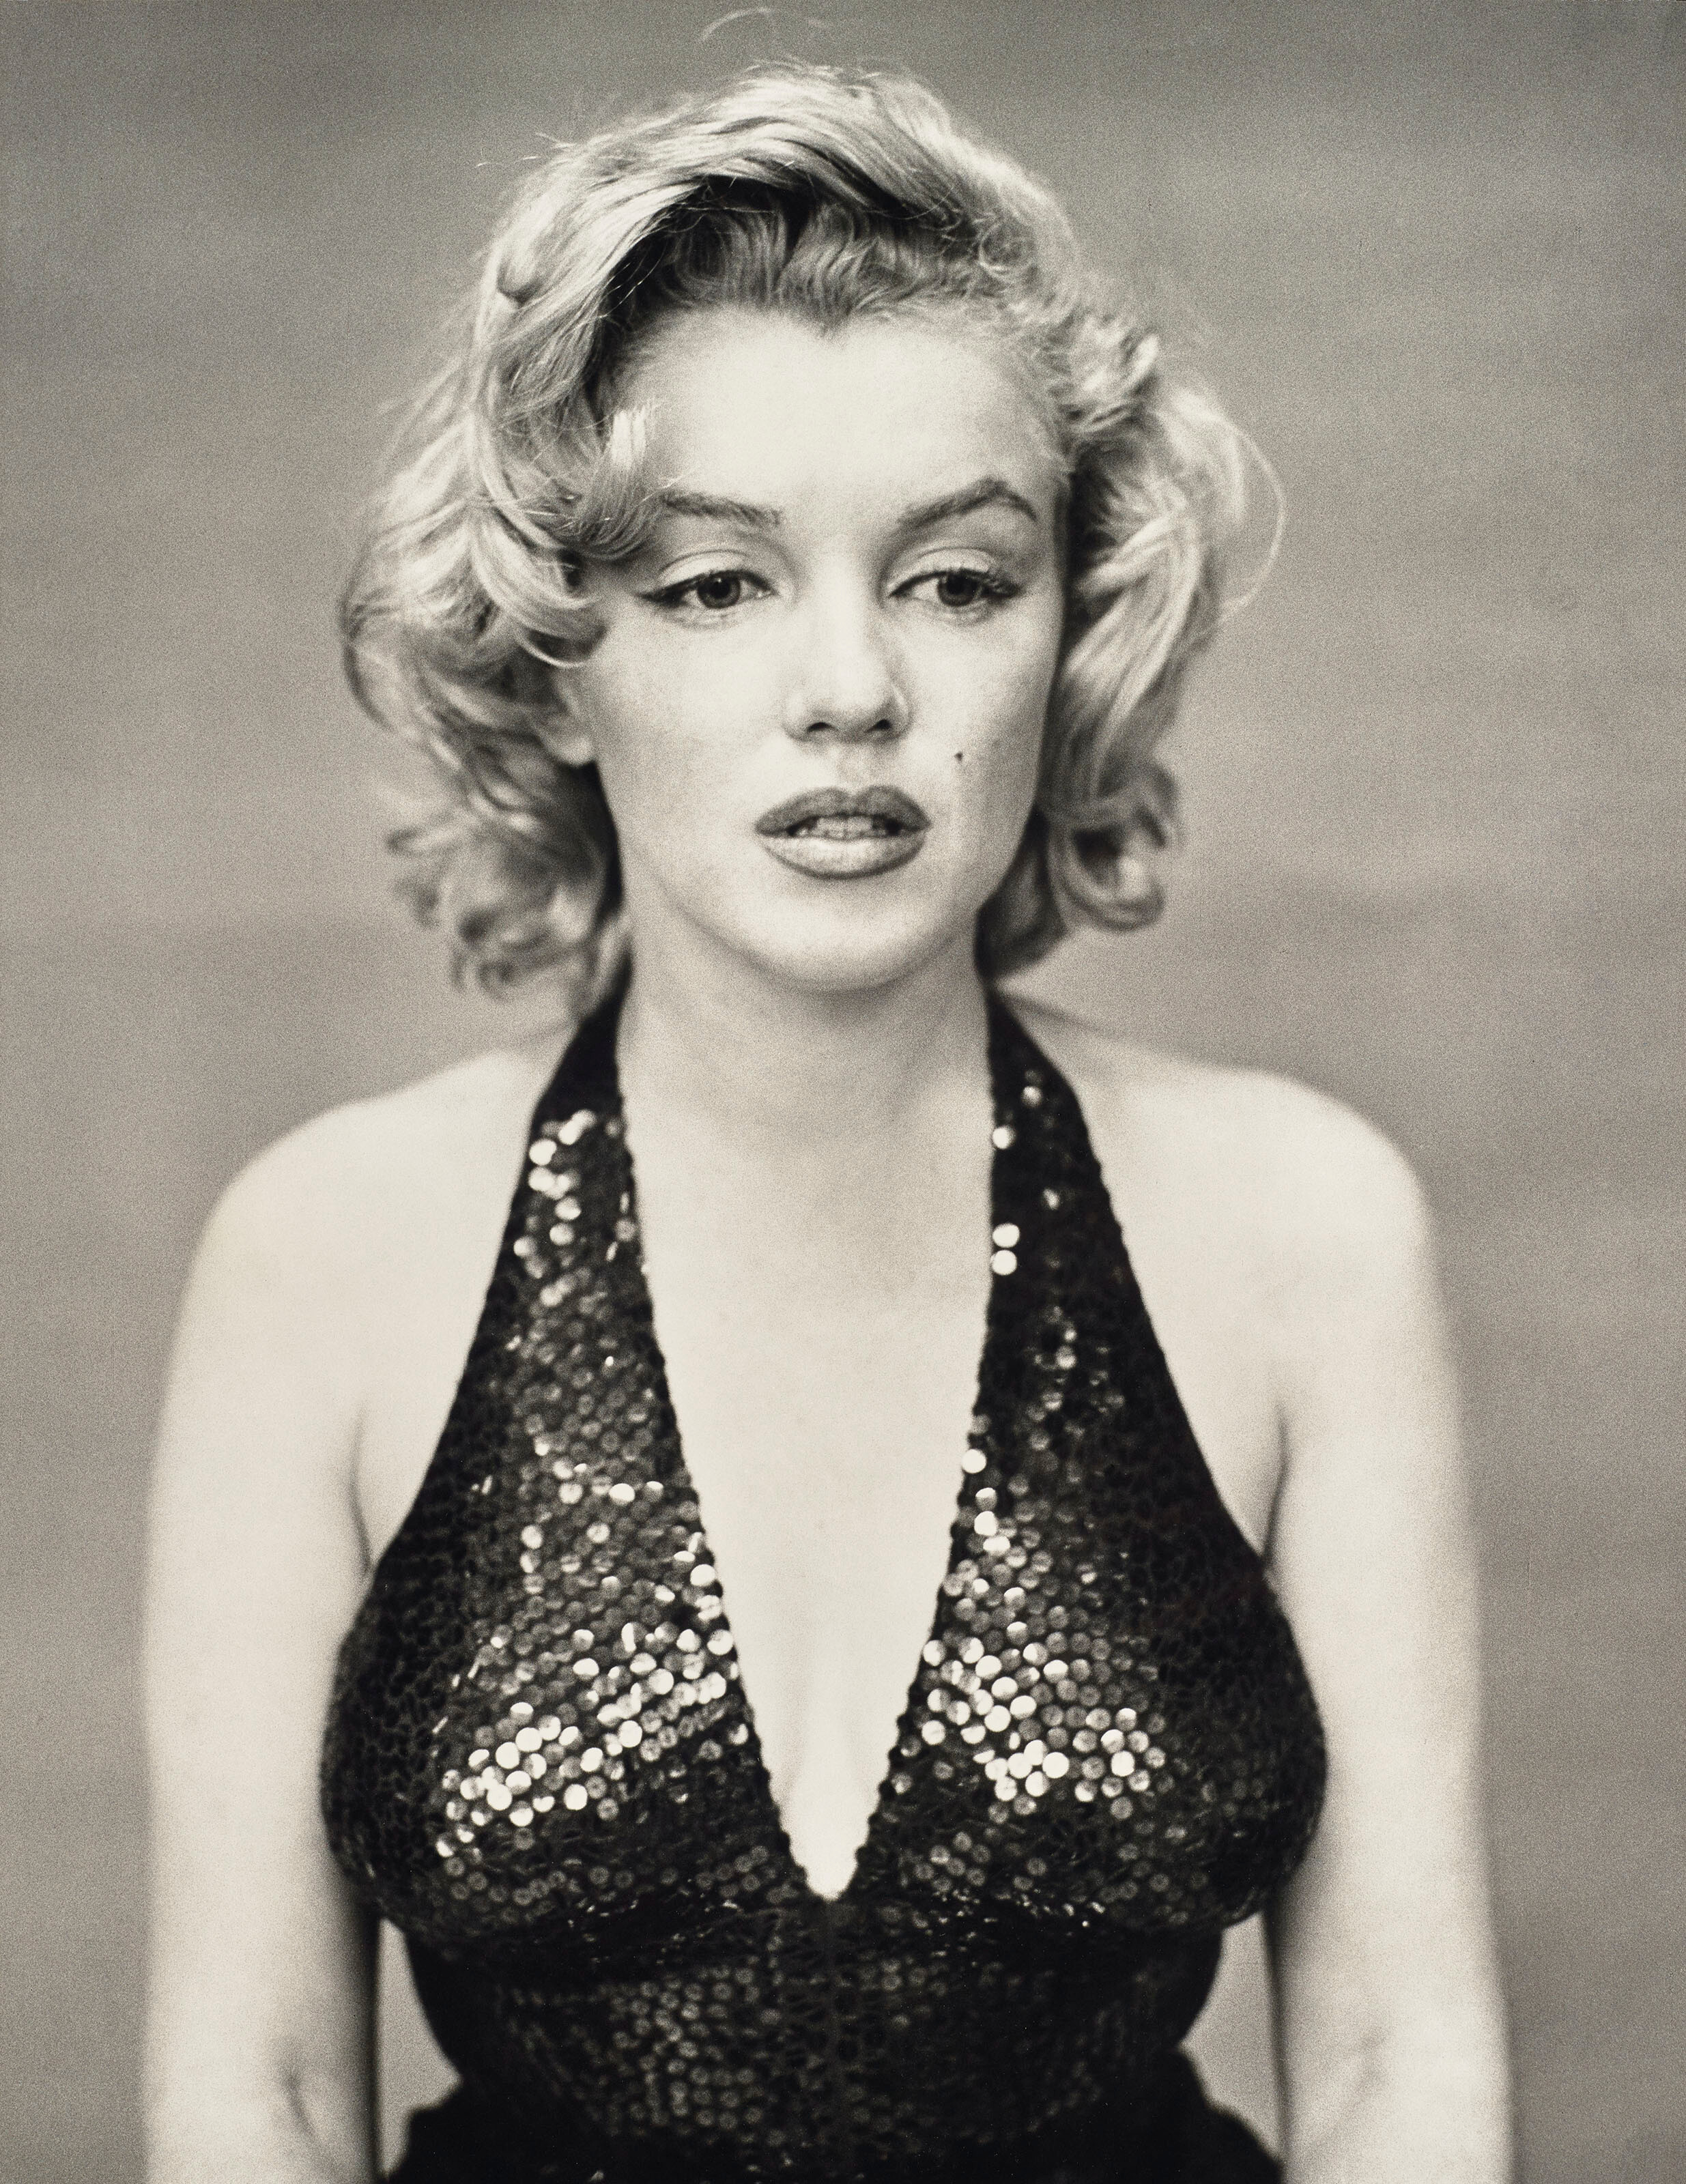 Мэрилин Монро, актриса, Нью-Йорк, 6 мая 1957 года.  Фотограф Ричард Аведон